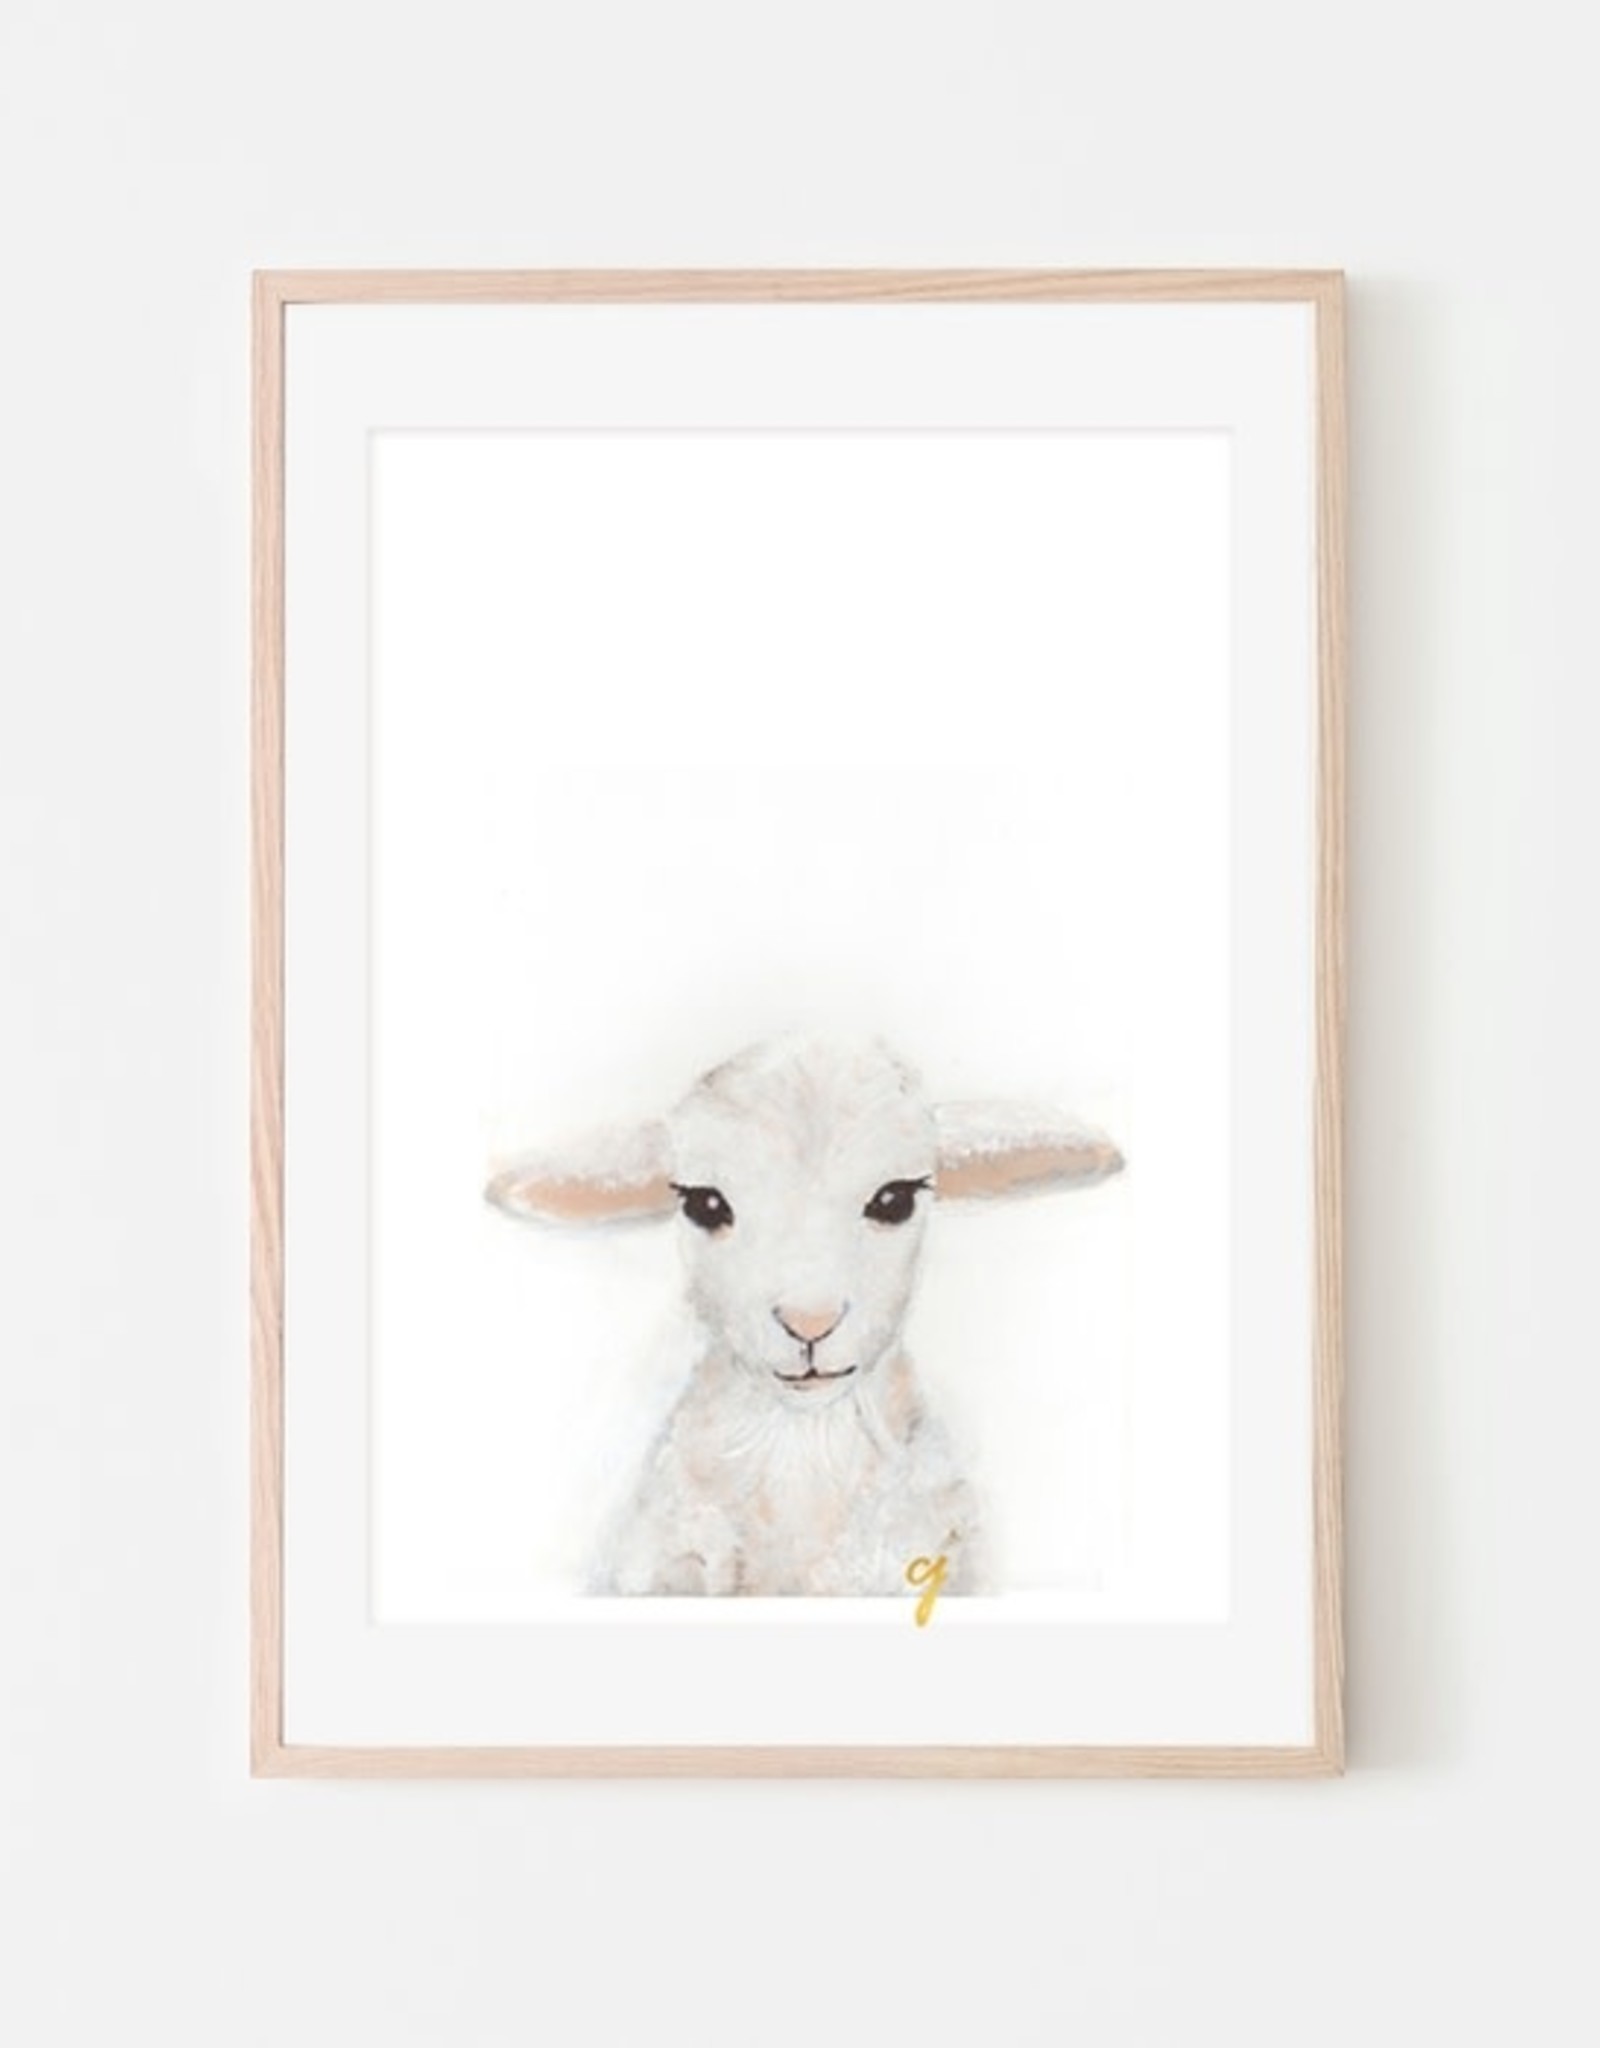 Lamb Nursery Print 11x14